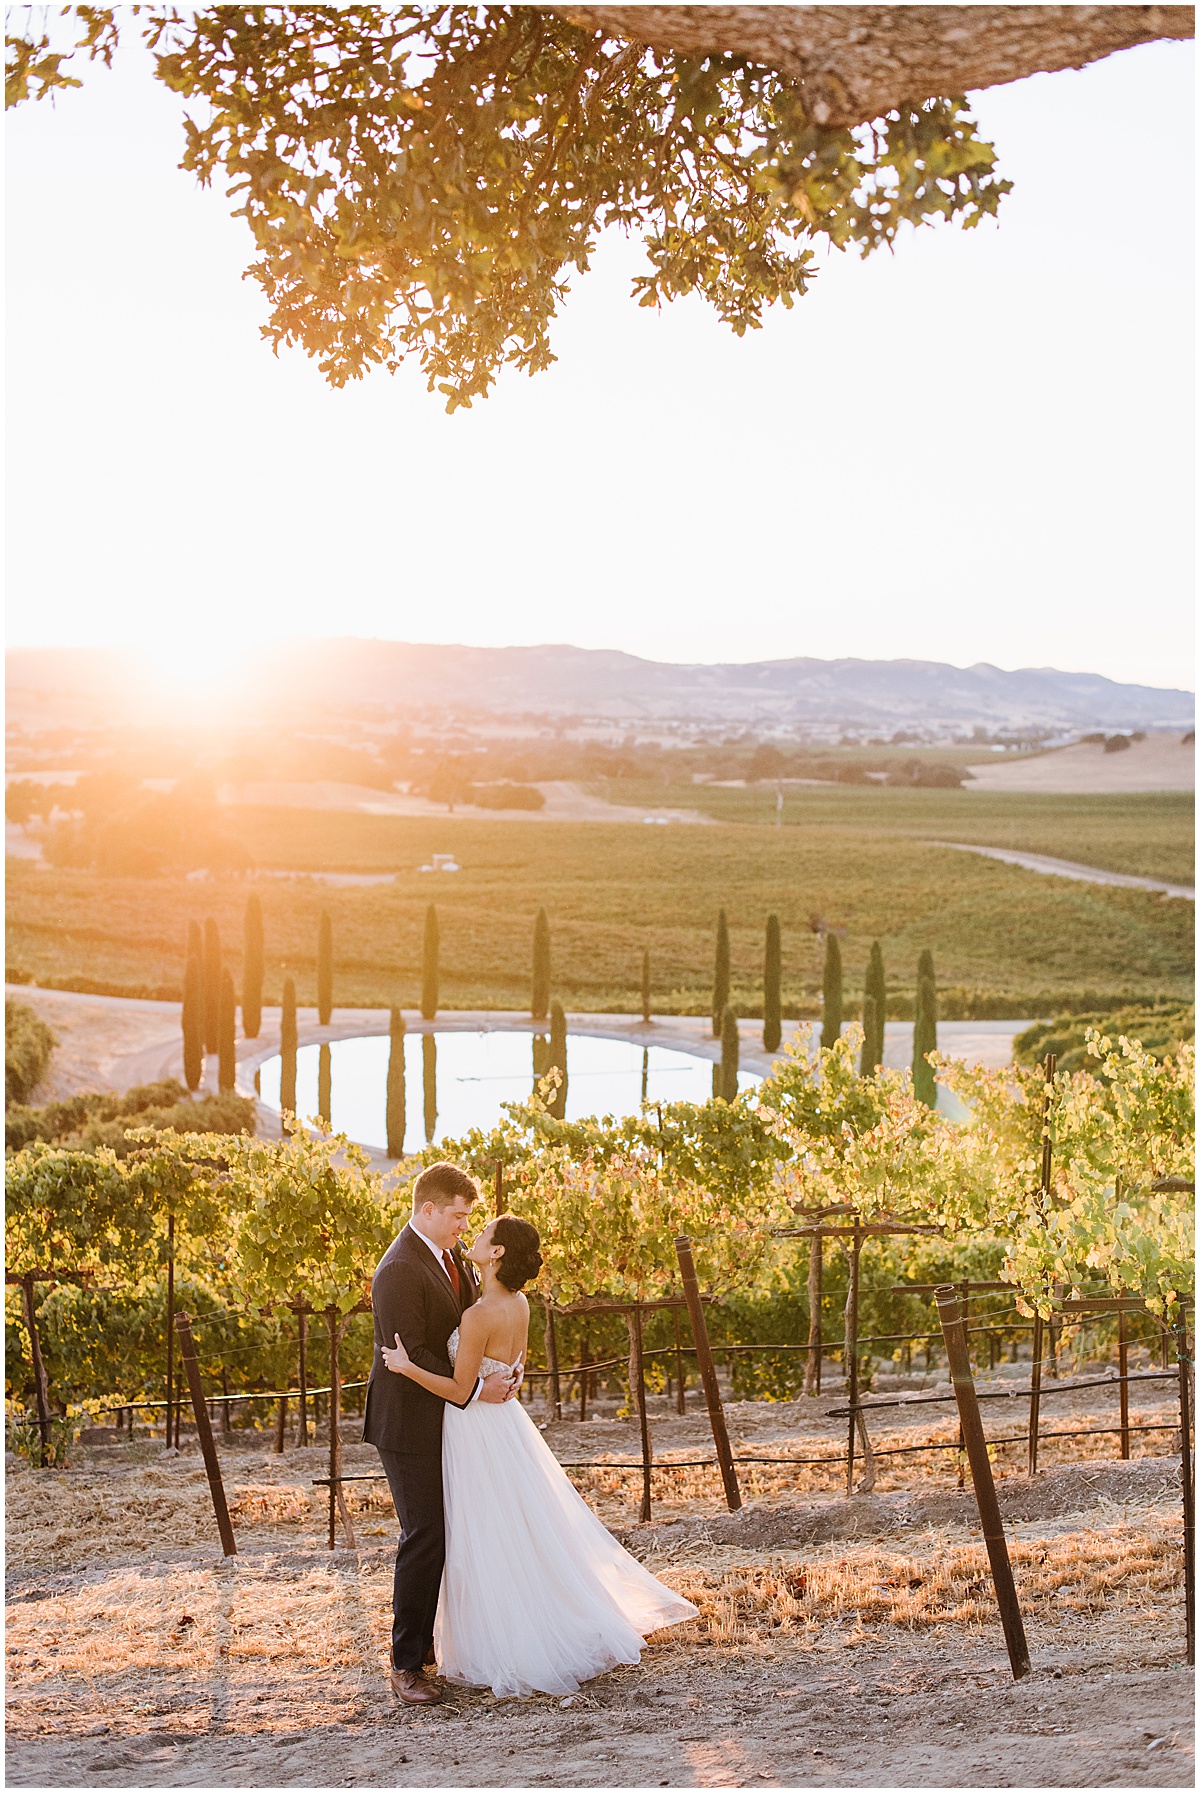 2018 Favorite Wedding Images San Luis Obispo County